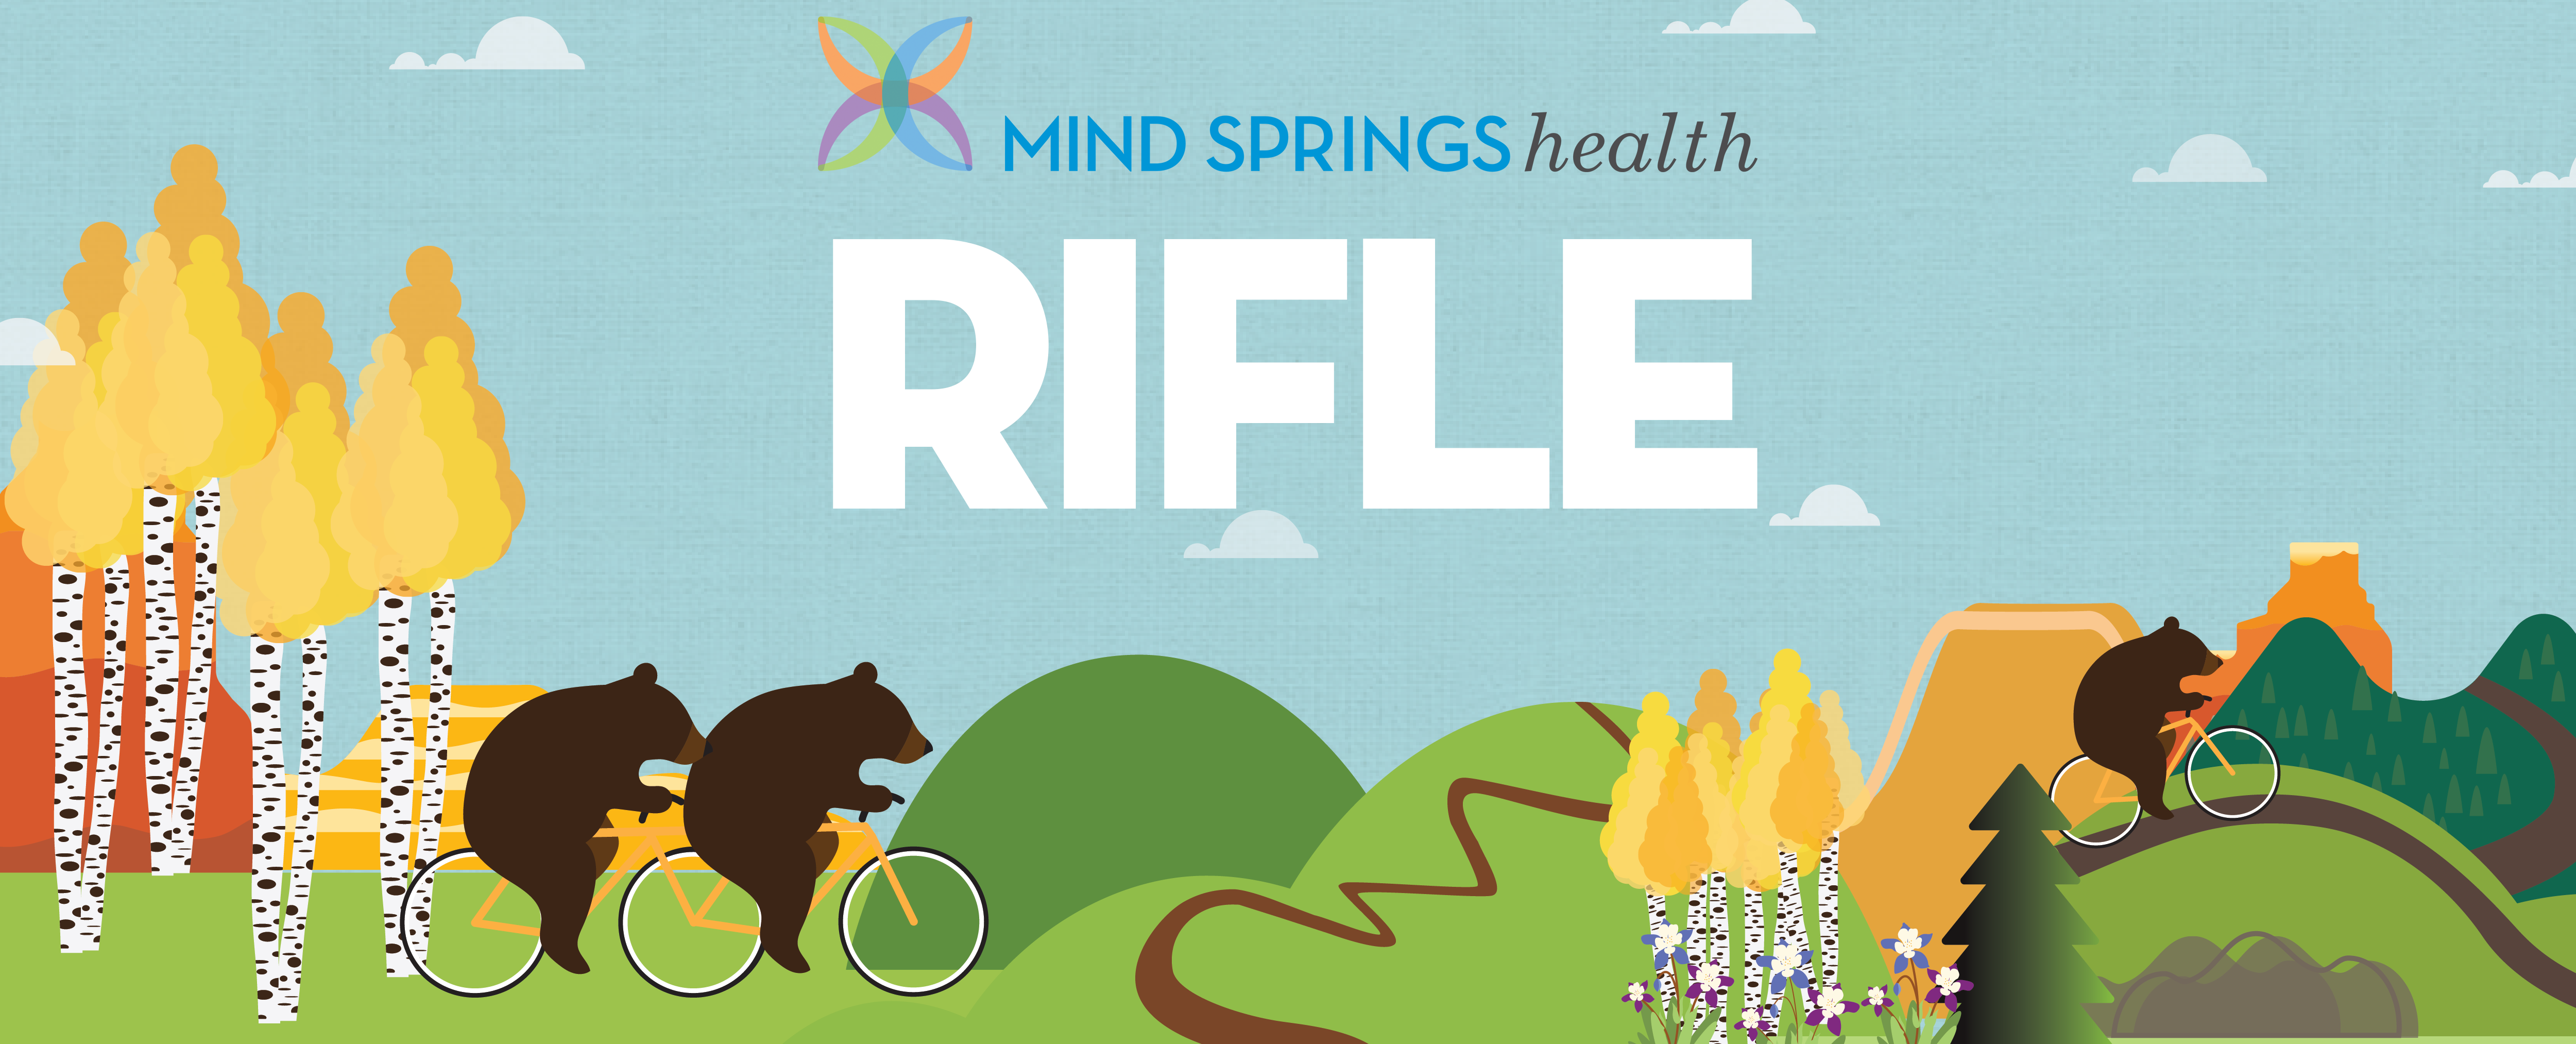 Mind Springs Health Rifle